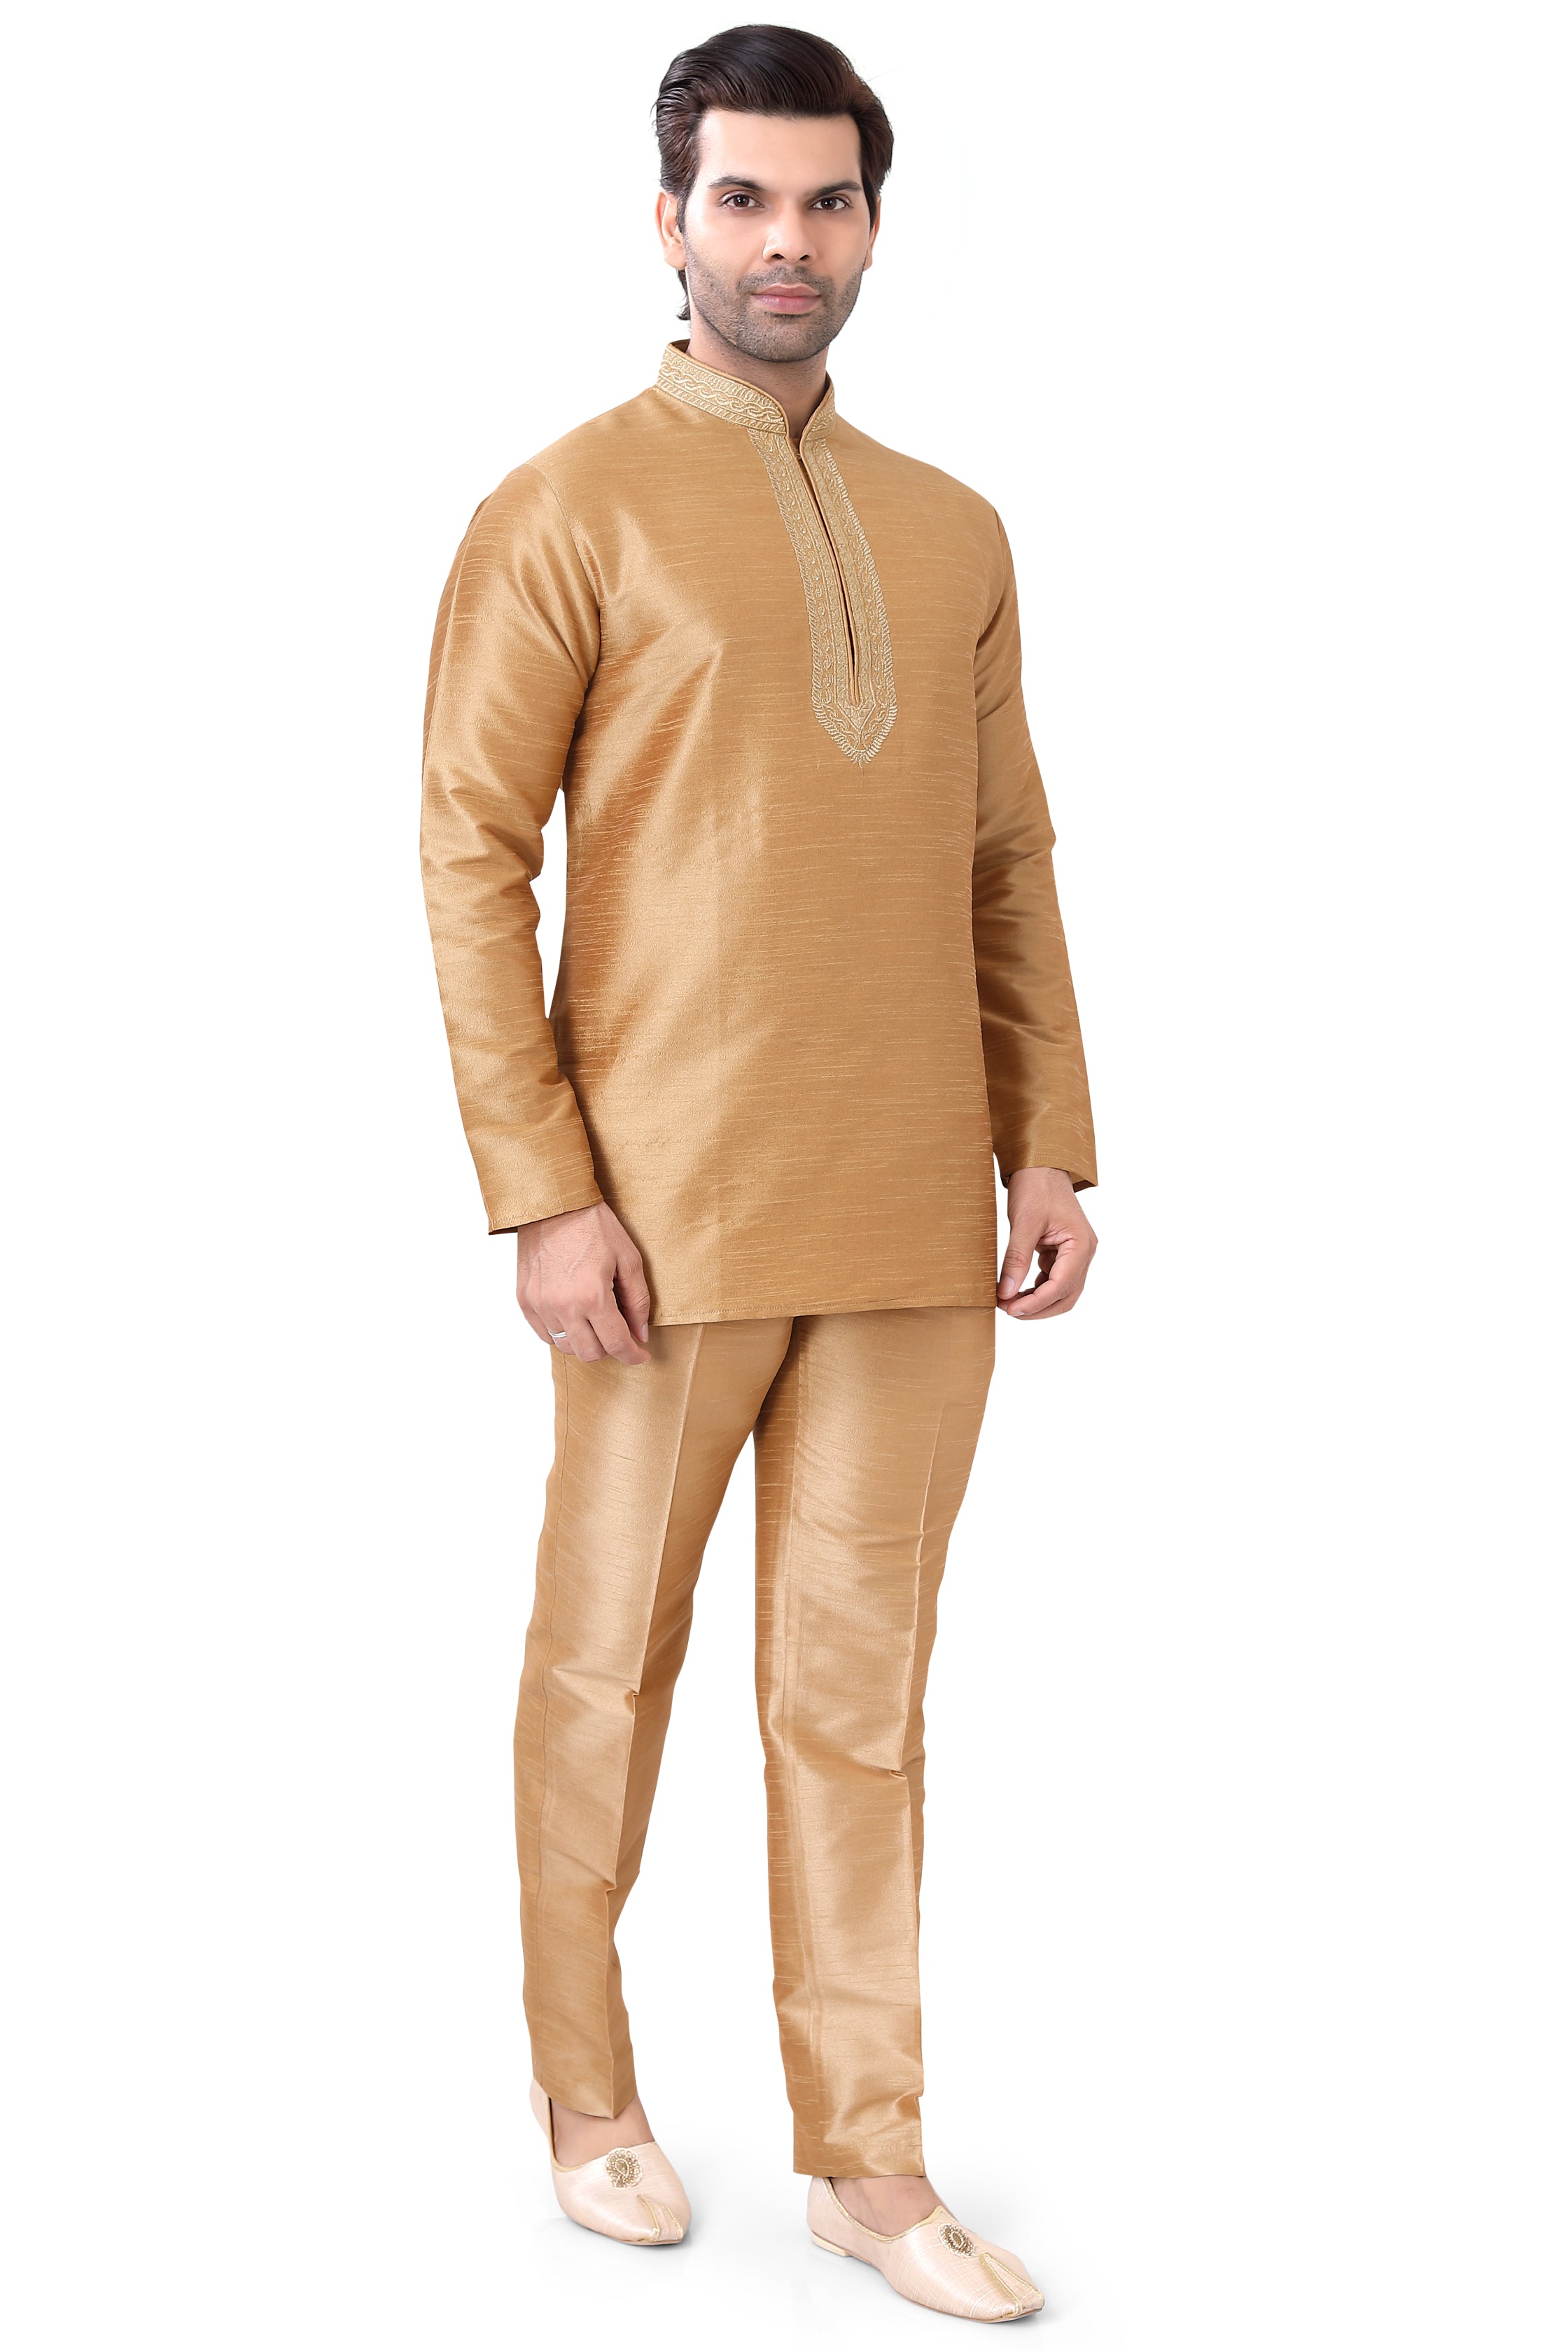 Banarasi Dupion Silk Short Kurta with embroidery in Gold color - Premium kurta pajama from Dapper Ethnic - Just $49! Shop now at Dulhan Exclusives